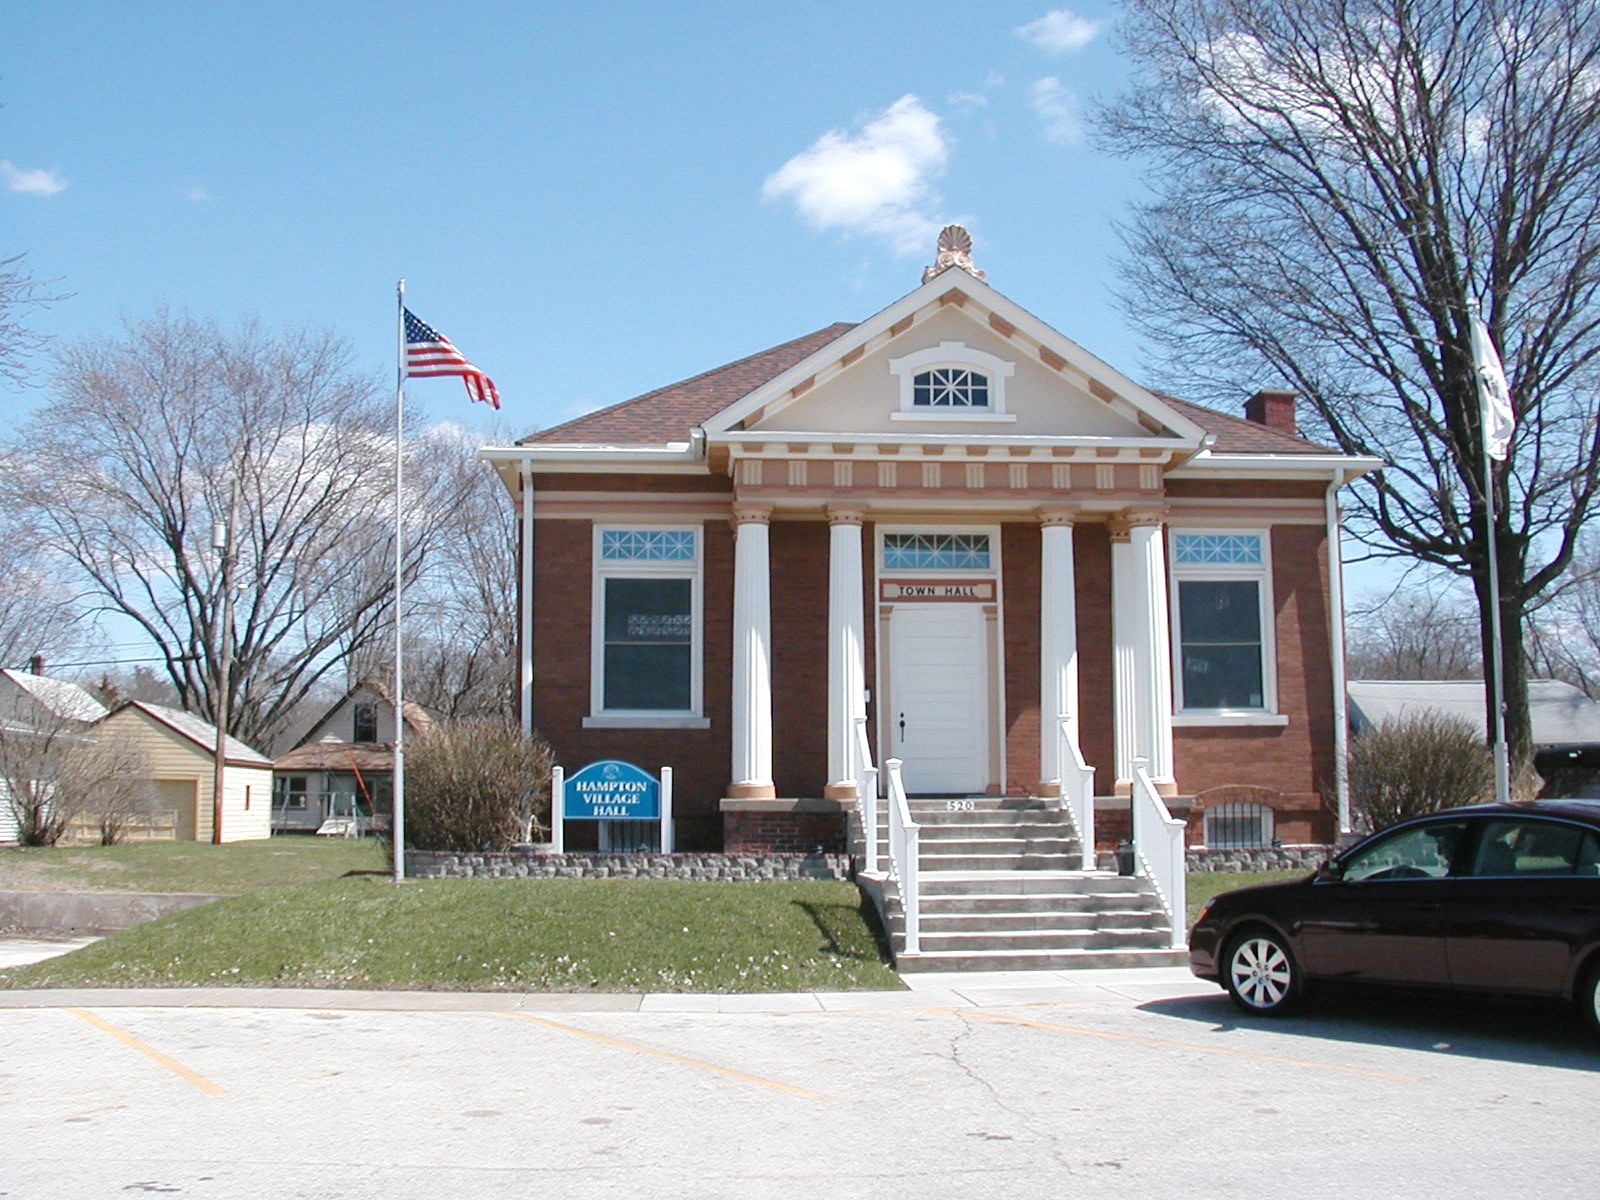 City Hall of the Village of Hampton